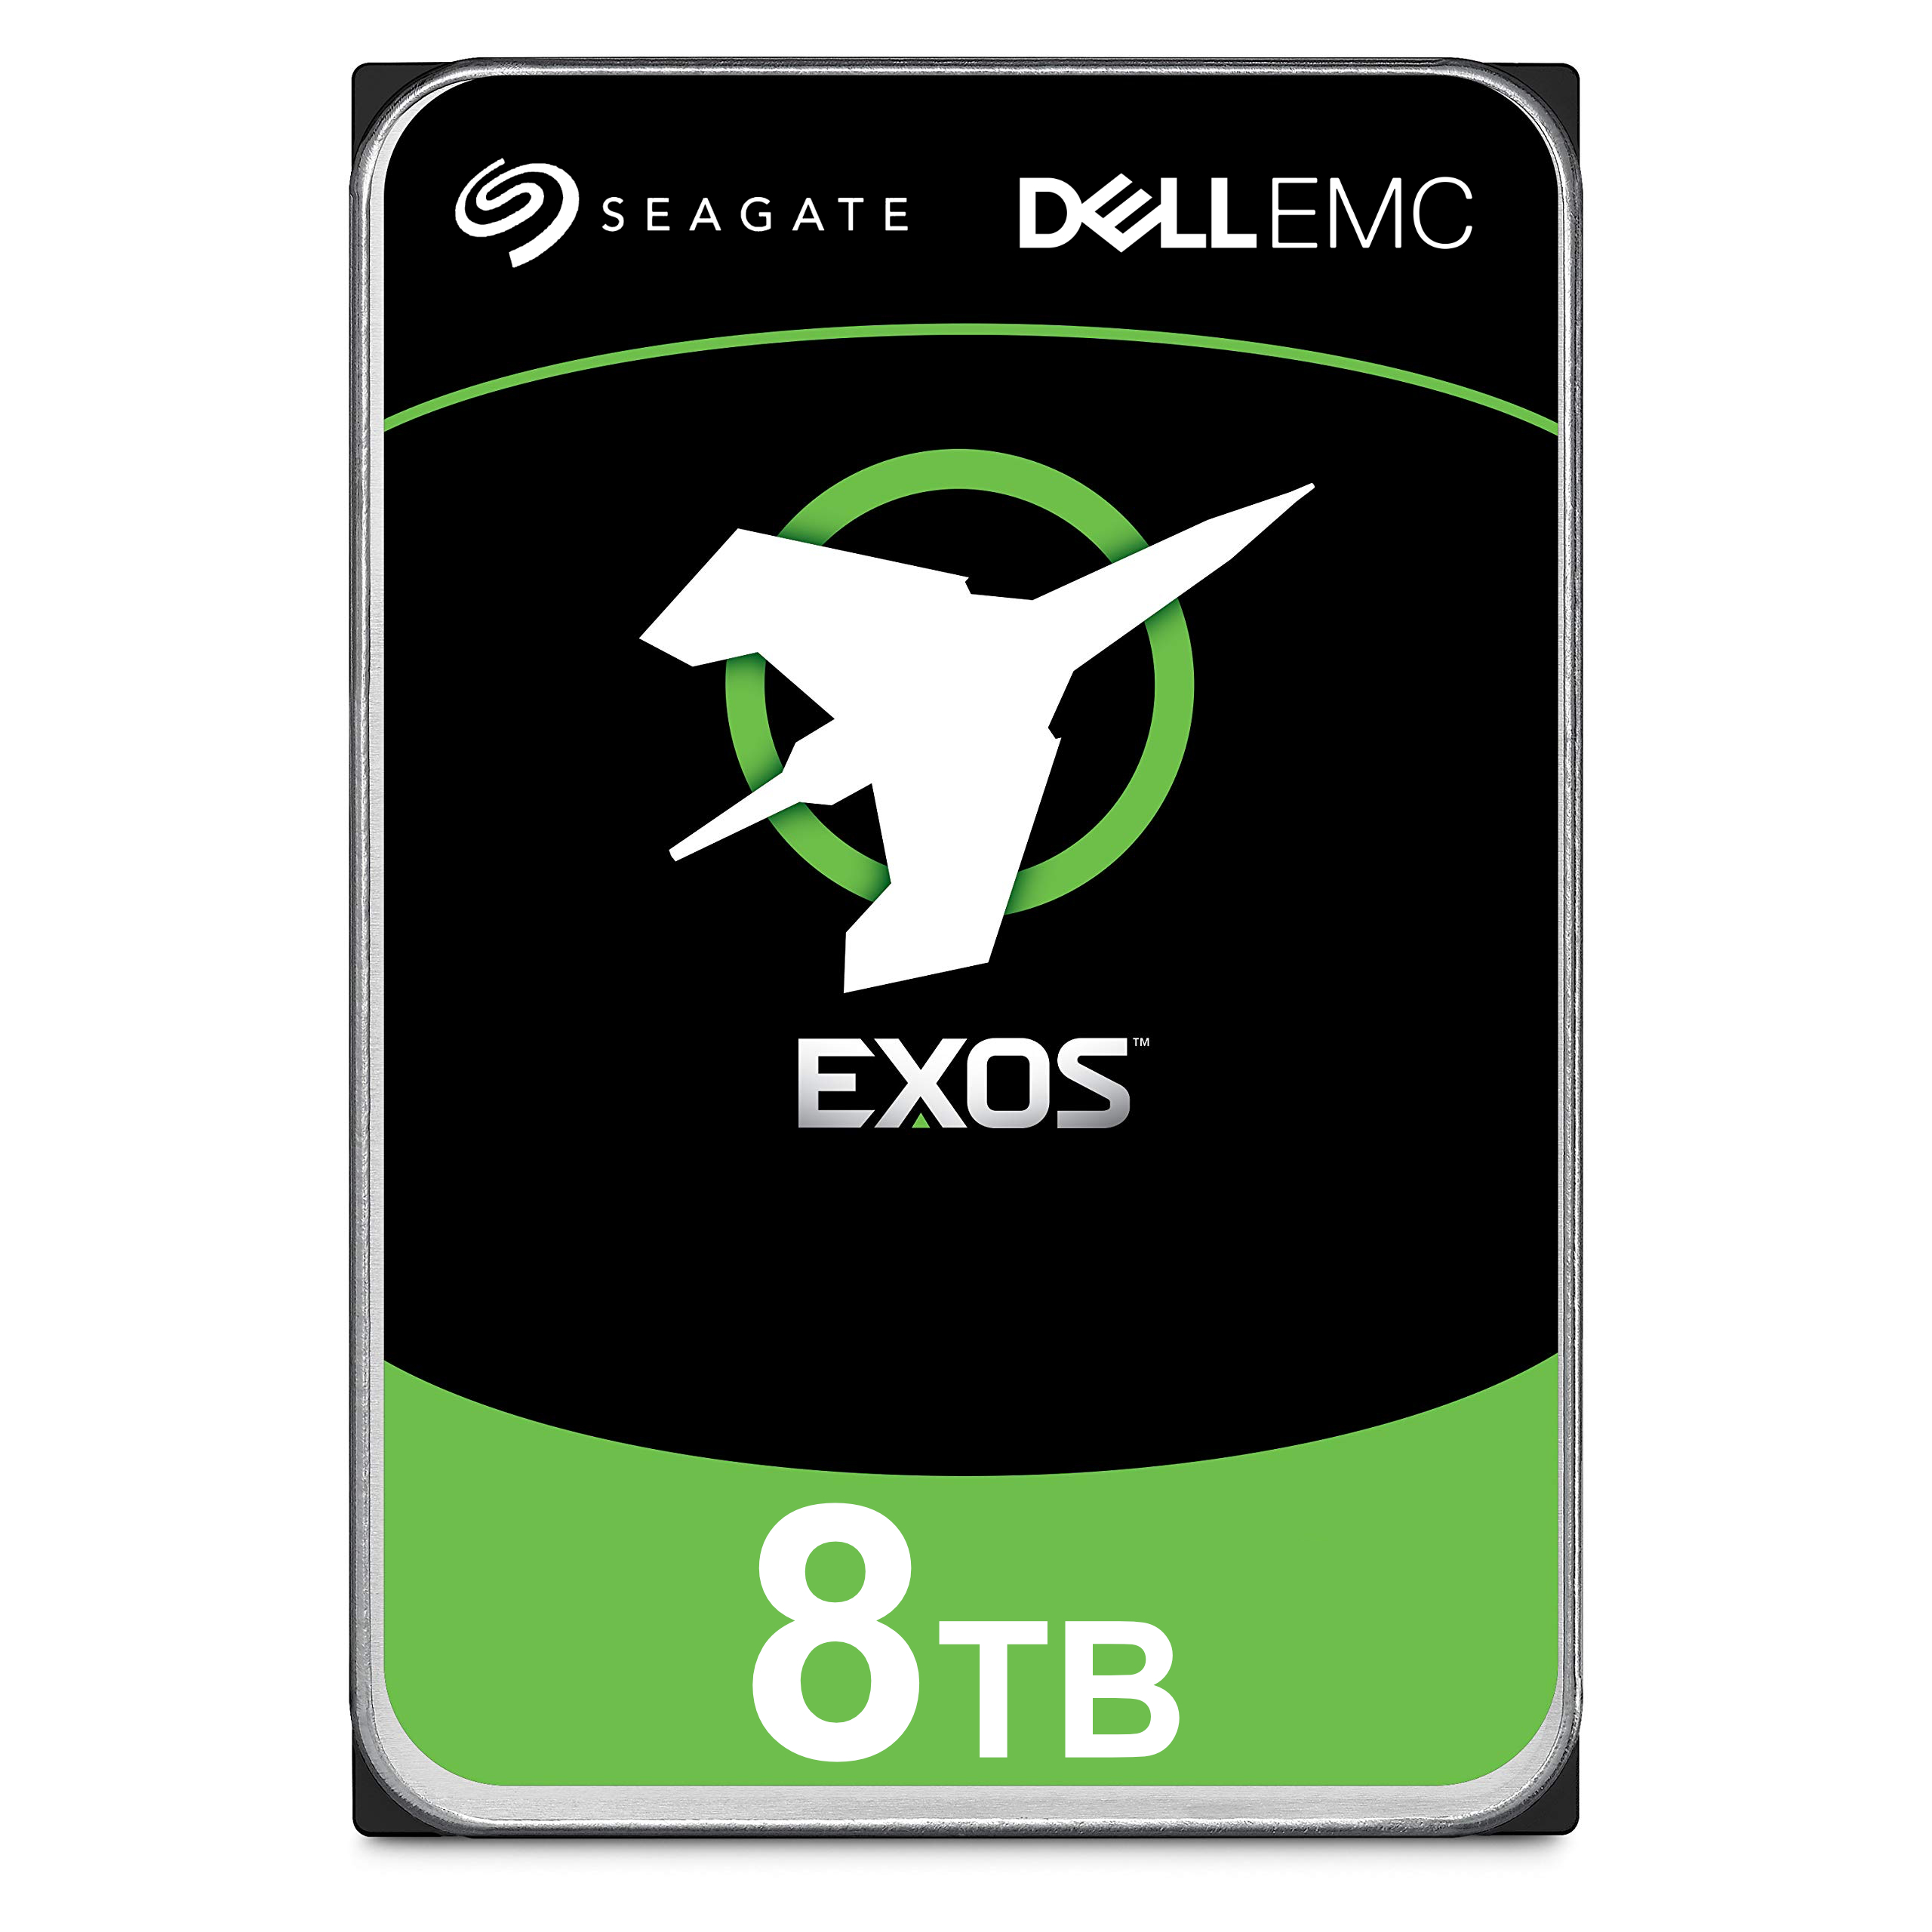 SEAGATE (Dell EMC) EXOS 8TB 7200RPM 256MB SATA3 NAS HDD ST8000NM023B